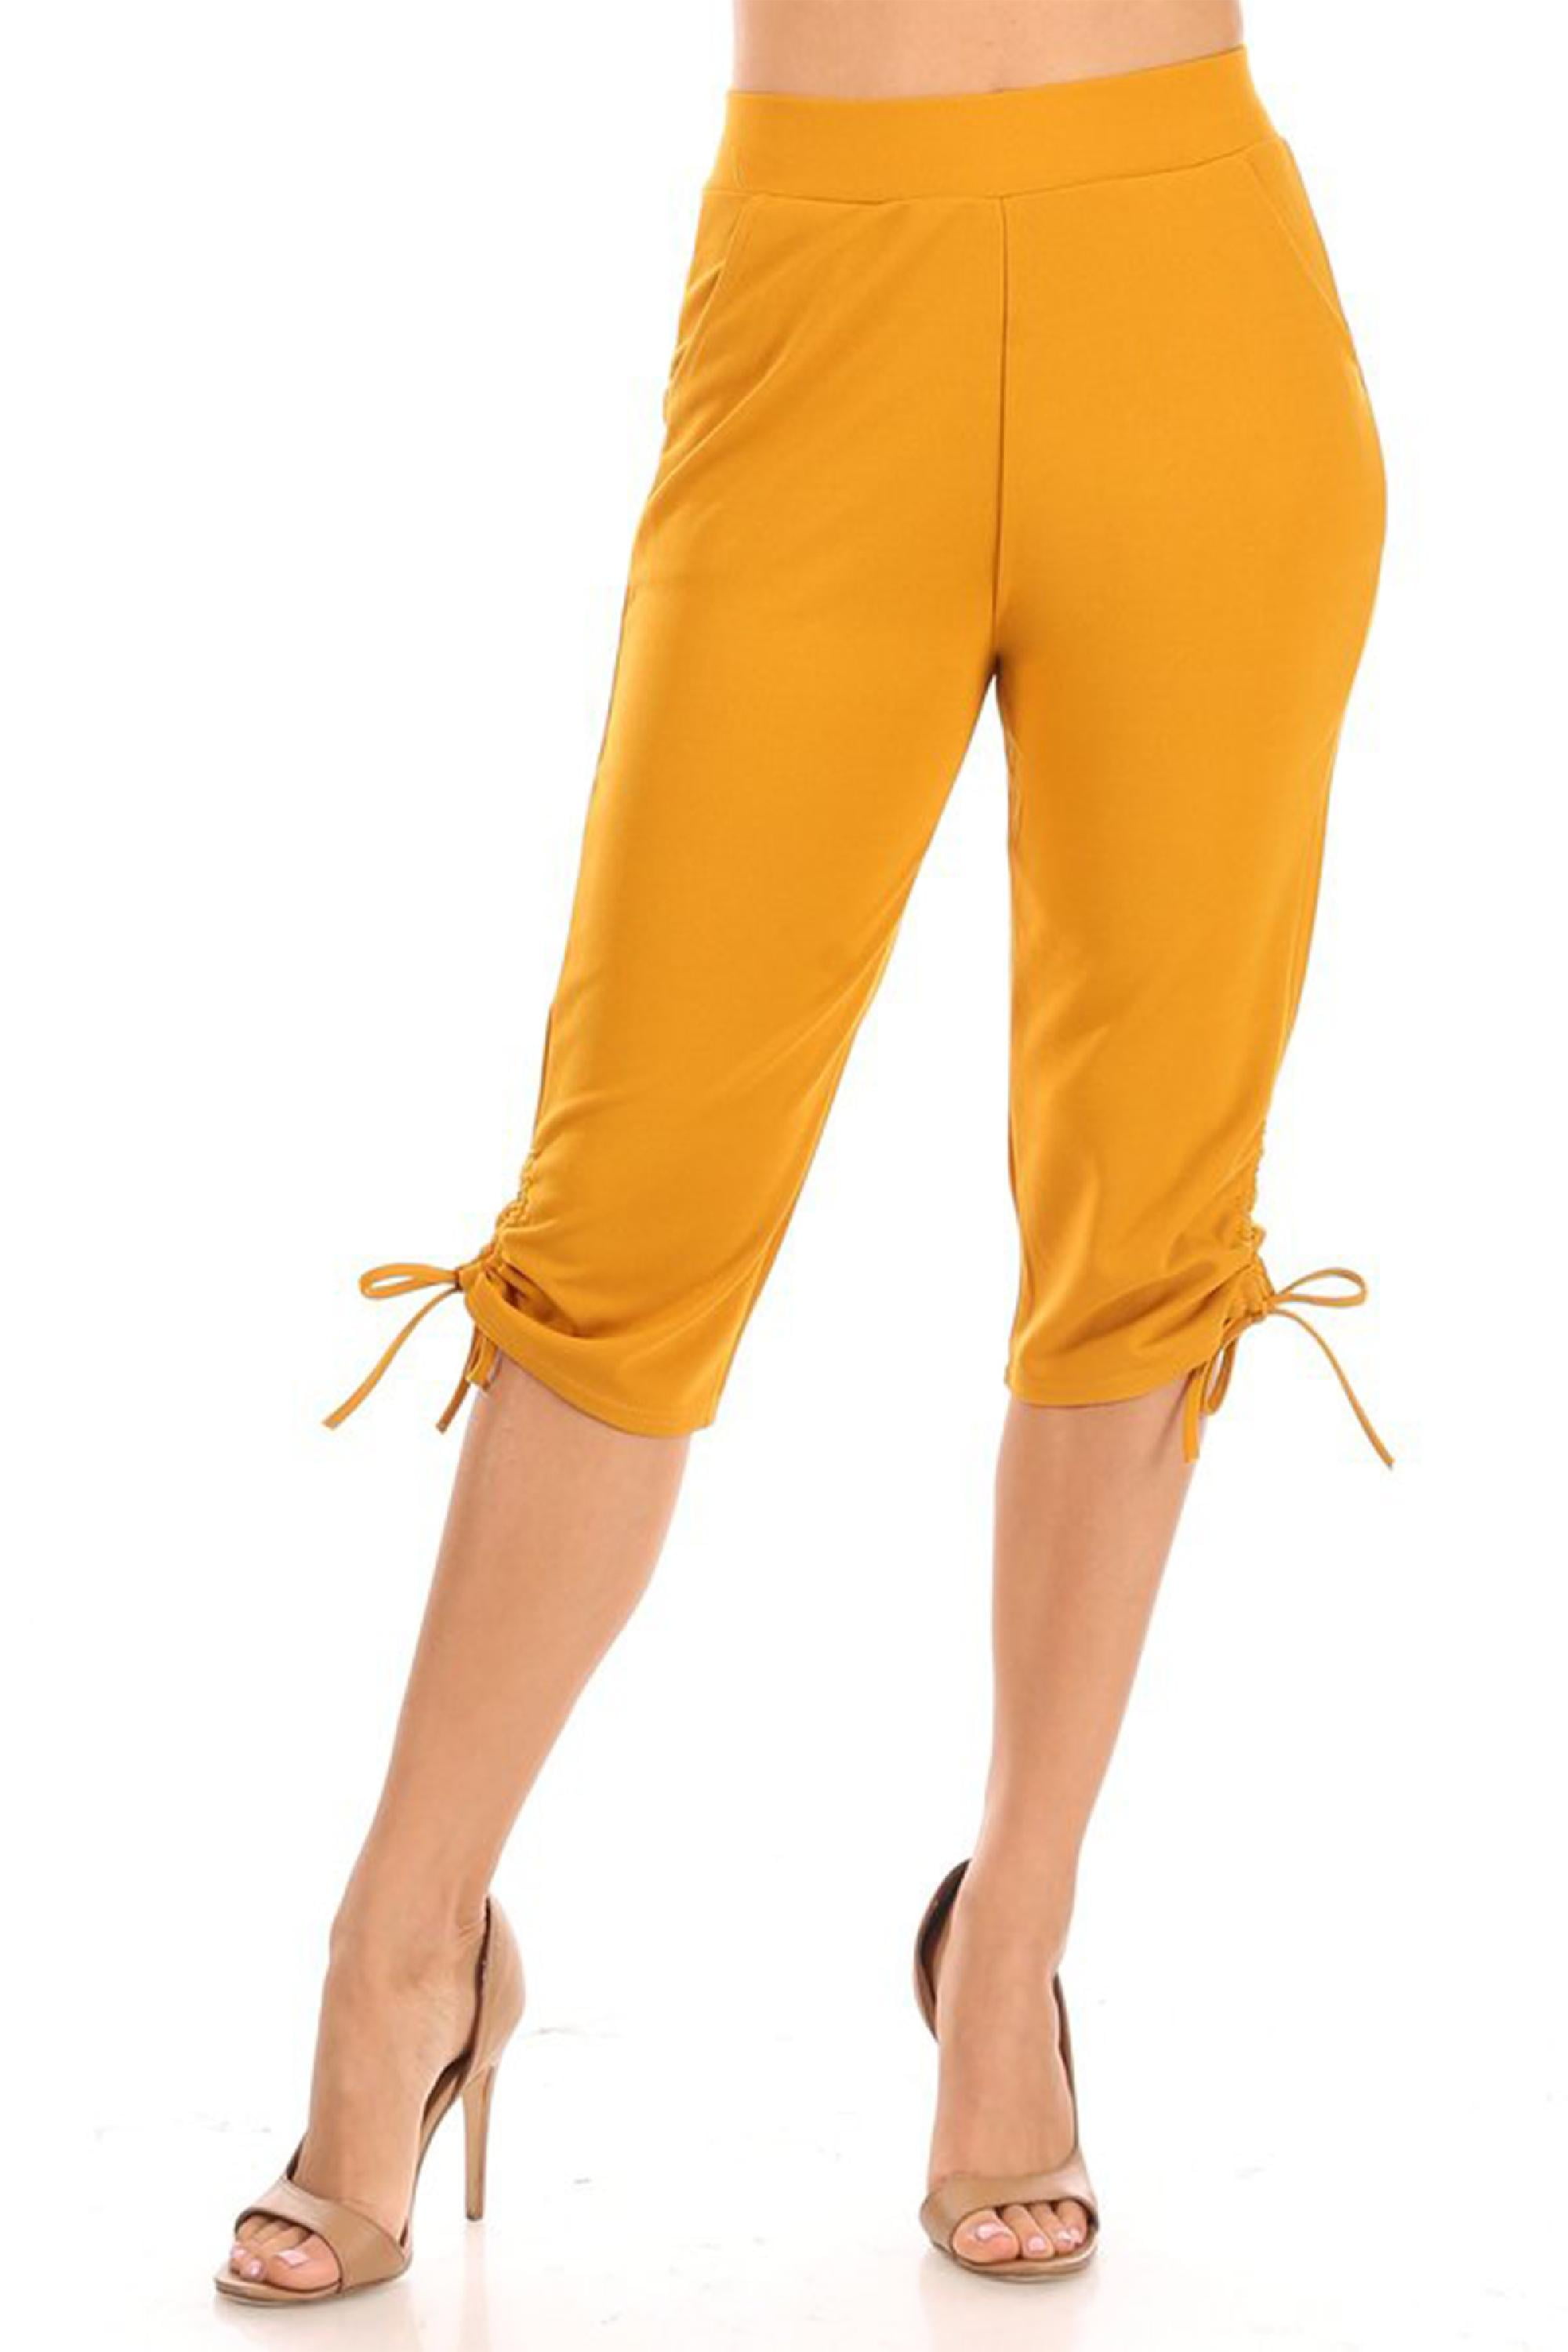 Moa Collection Women S Casual Stretch Elastic High Waist Pockets Solid Capri Pants Walmart